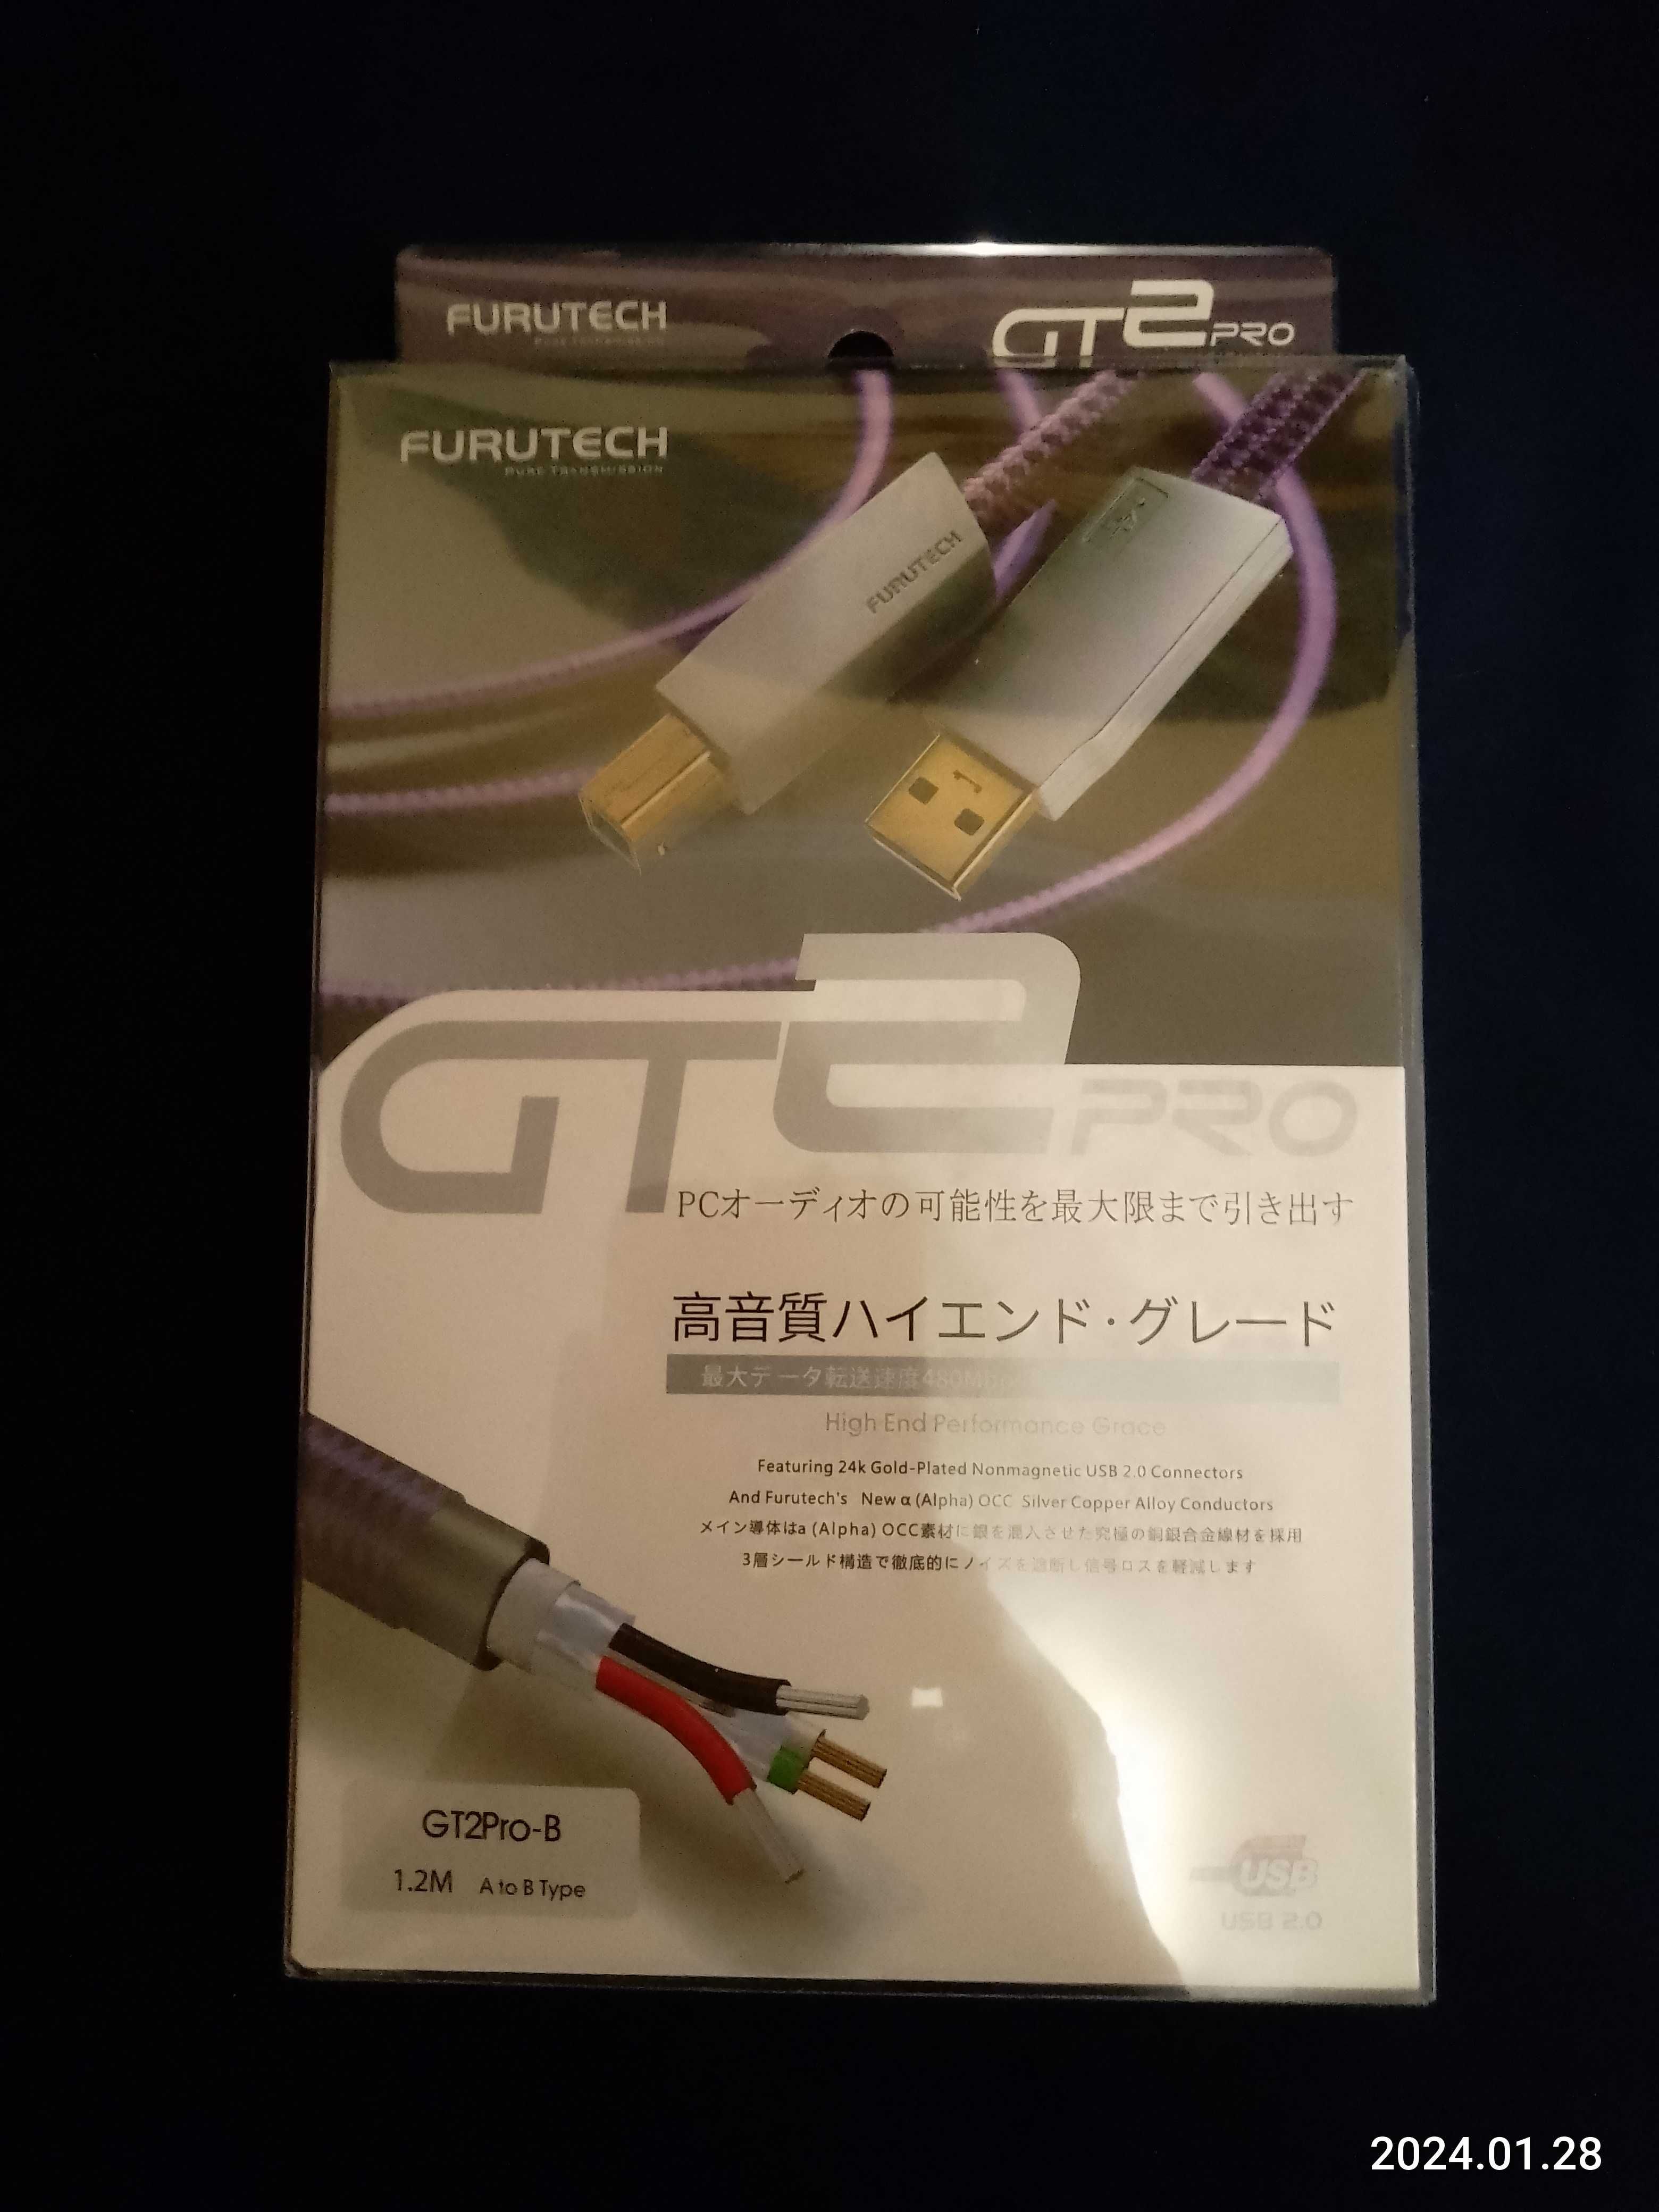 Кабель USB 2.0 Furutech - GT2Pro (1.8m.) (Atlas AudioQuest Ecosse Qed)